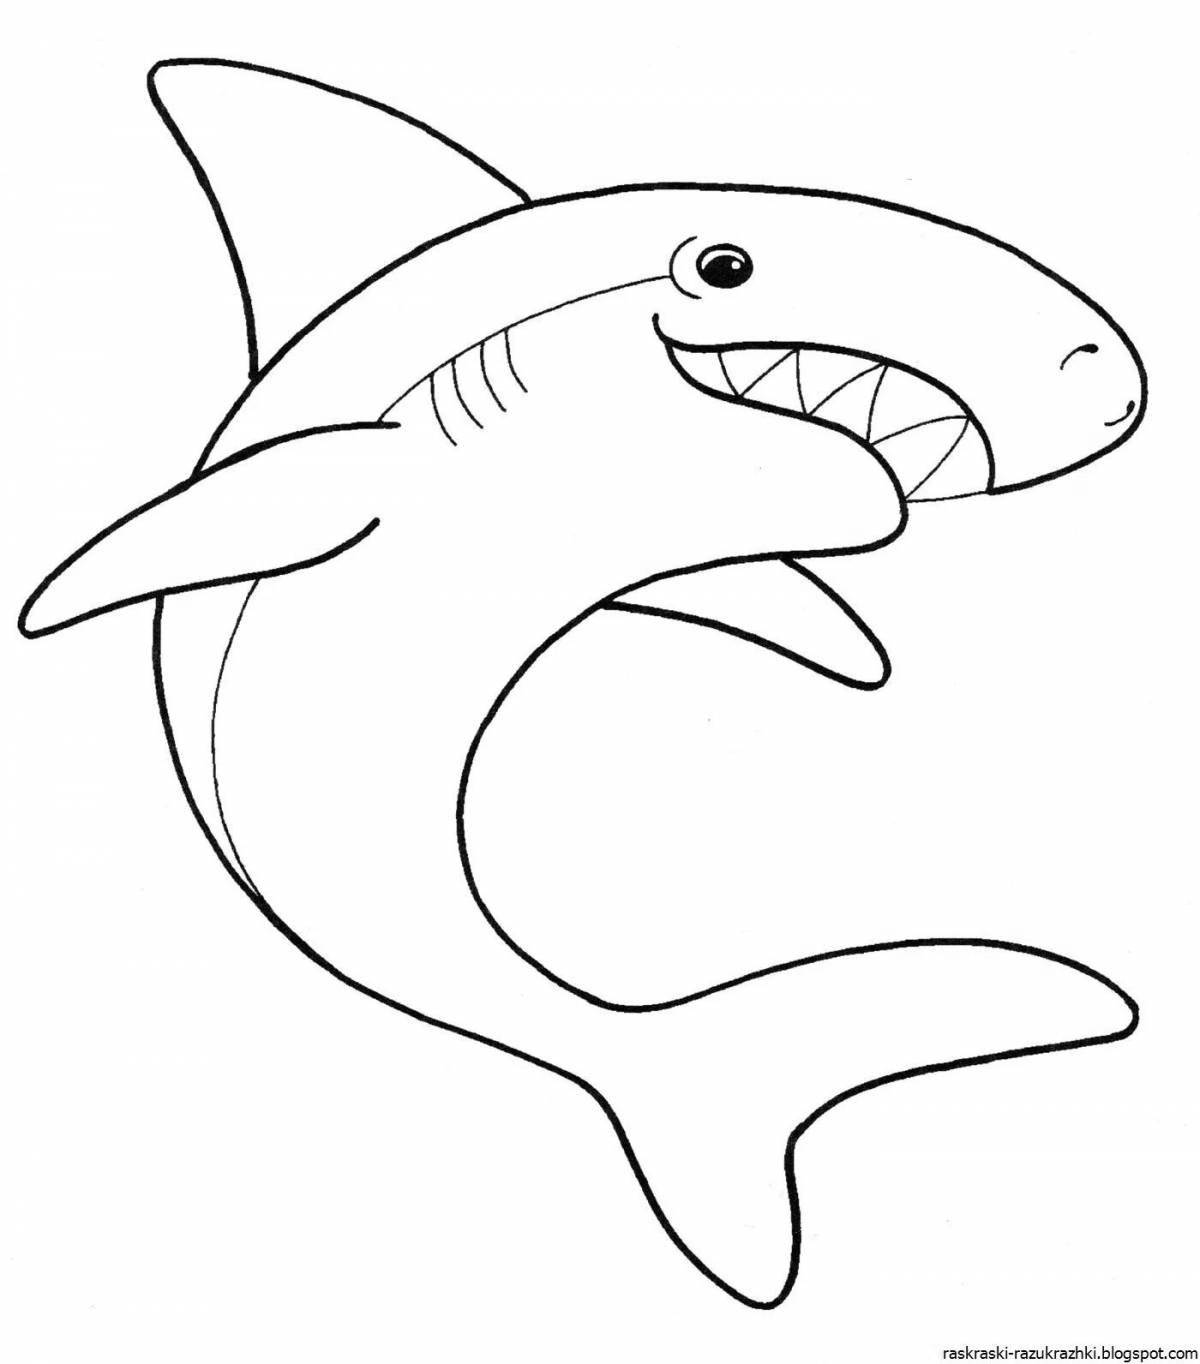 Яркая акула-раскраска для детей 4-5 лет